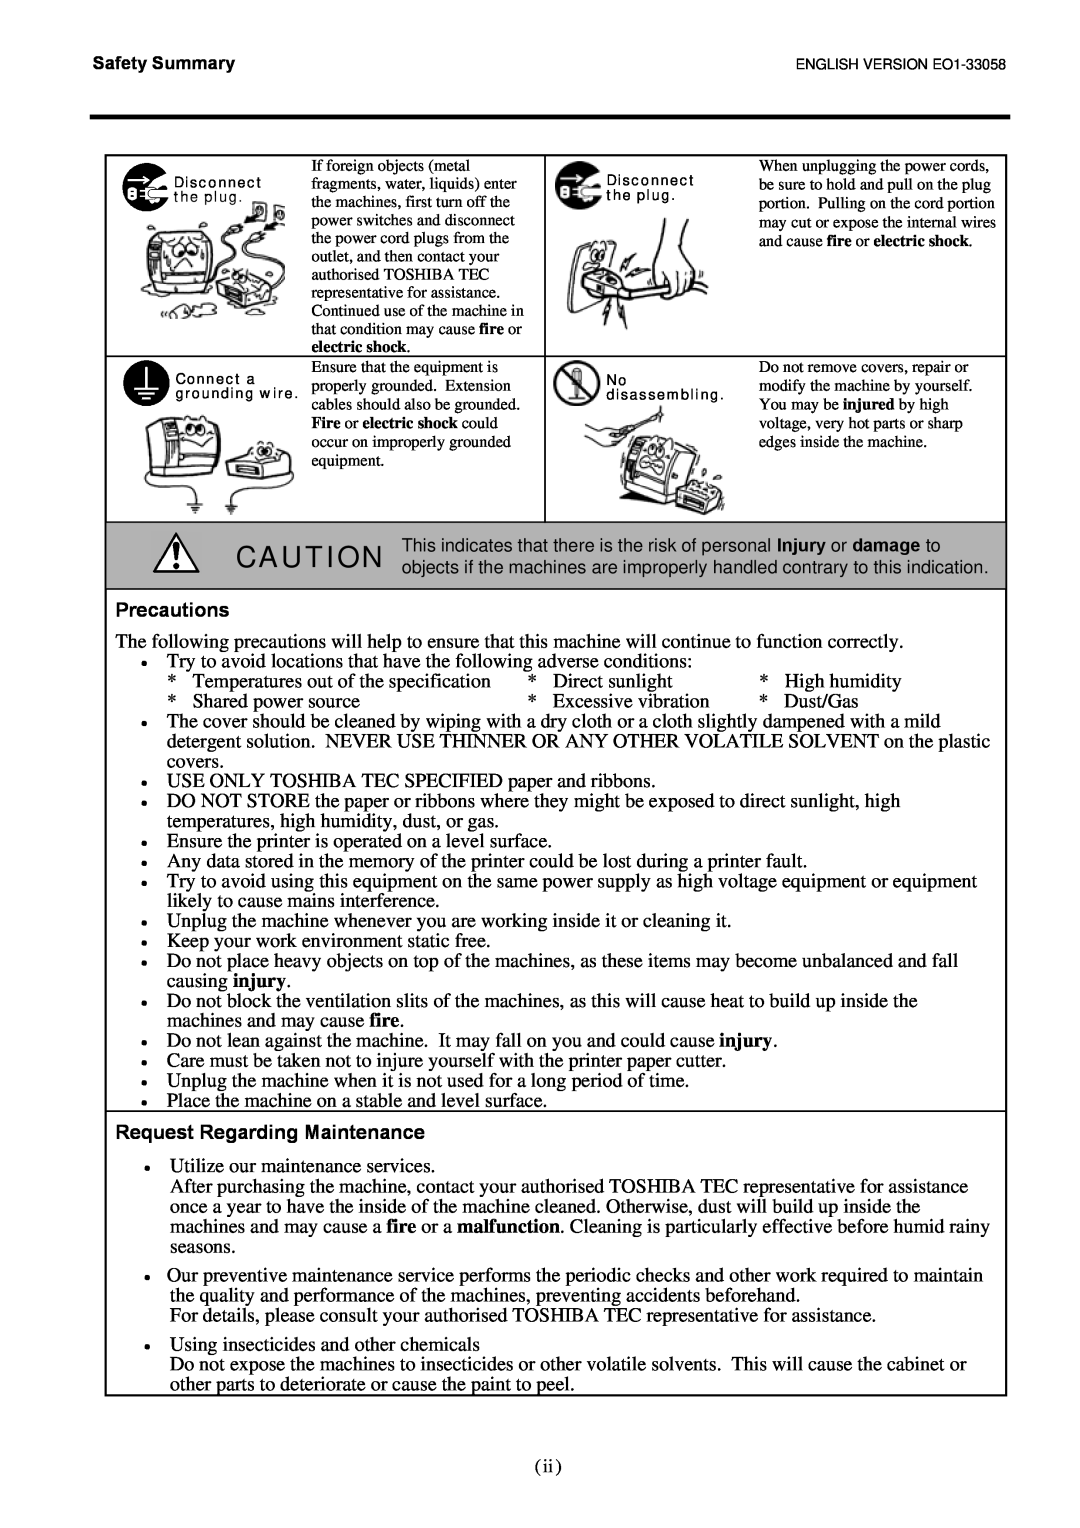 Toshiba B-SX4T owner manual Precautions, Request Regarding Maintenance 